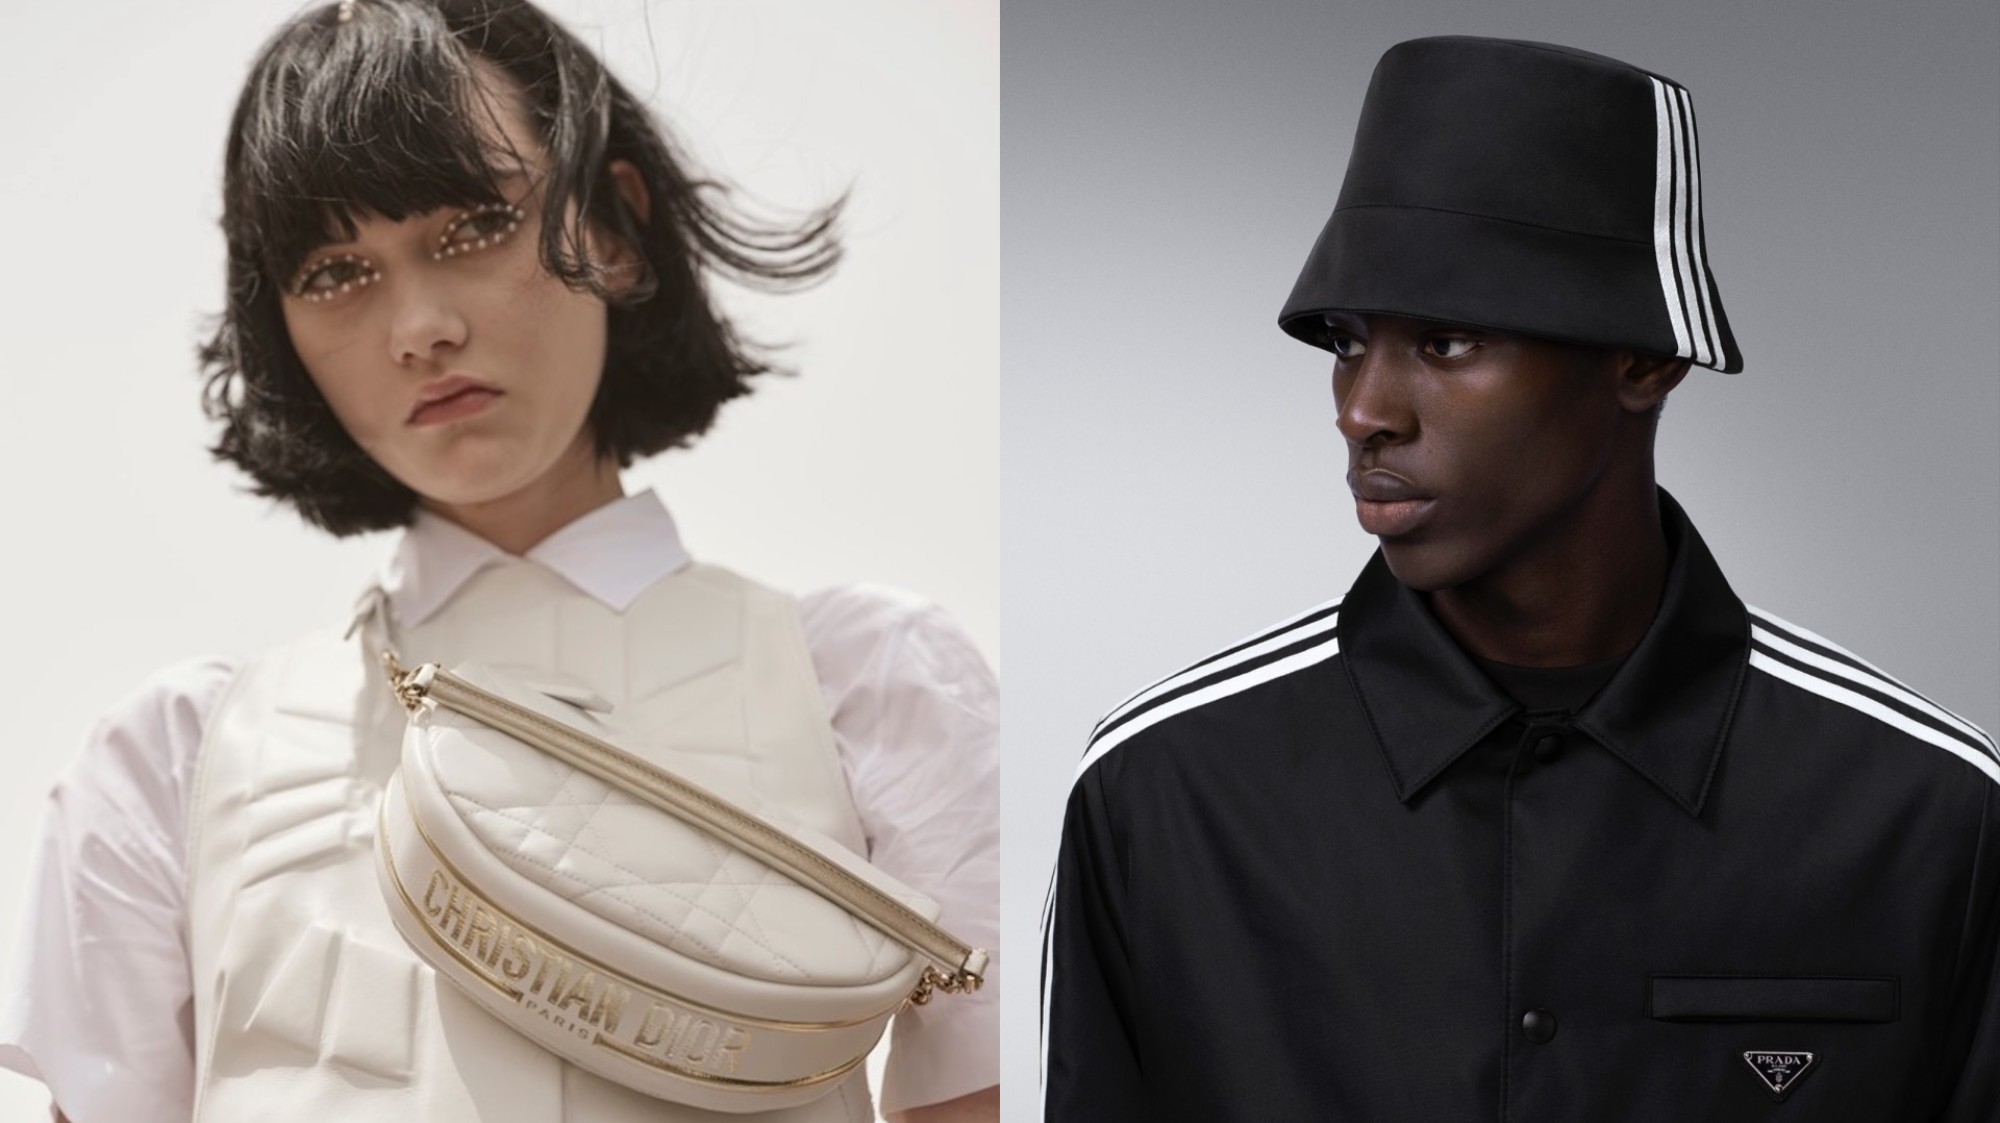 Balenciaga x Yeezy Pradidas and gym bags: What's in Fashion - i-D